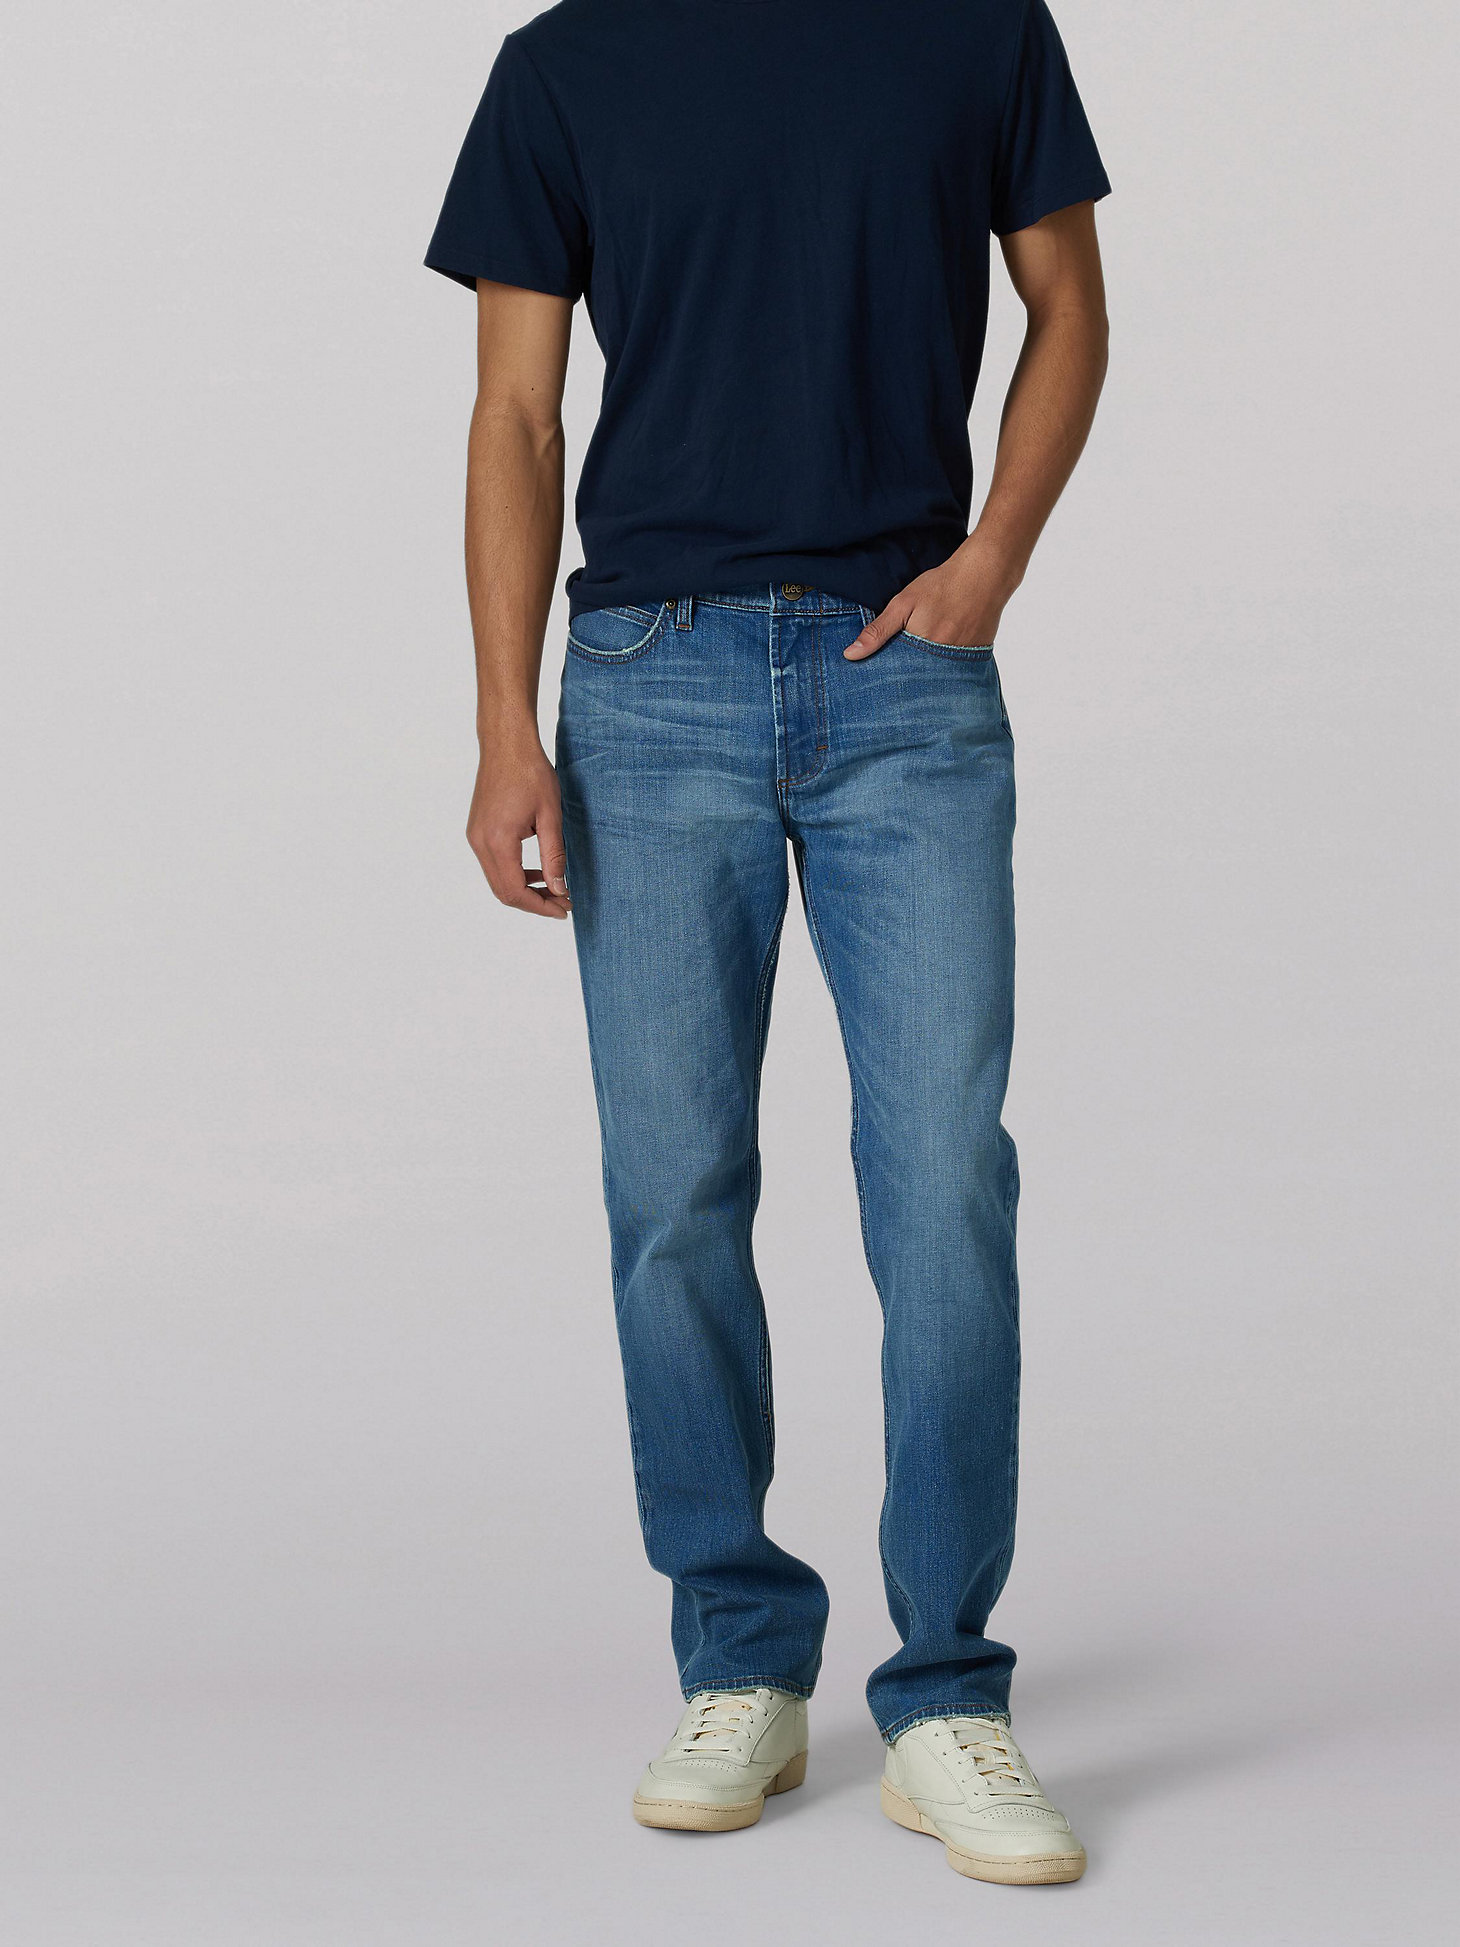 Men's Heritage 5 Pocket Regular Fit Straight Leg Jean in Chasin alternative view 3